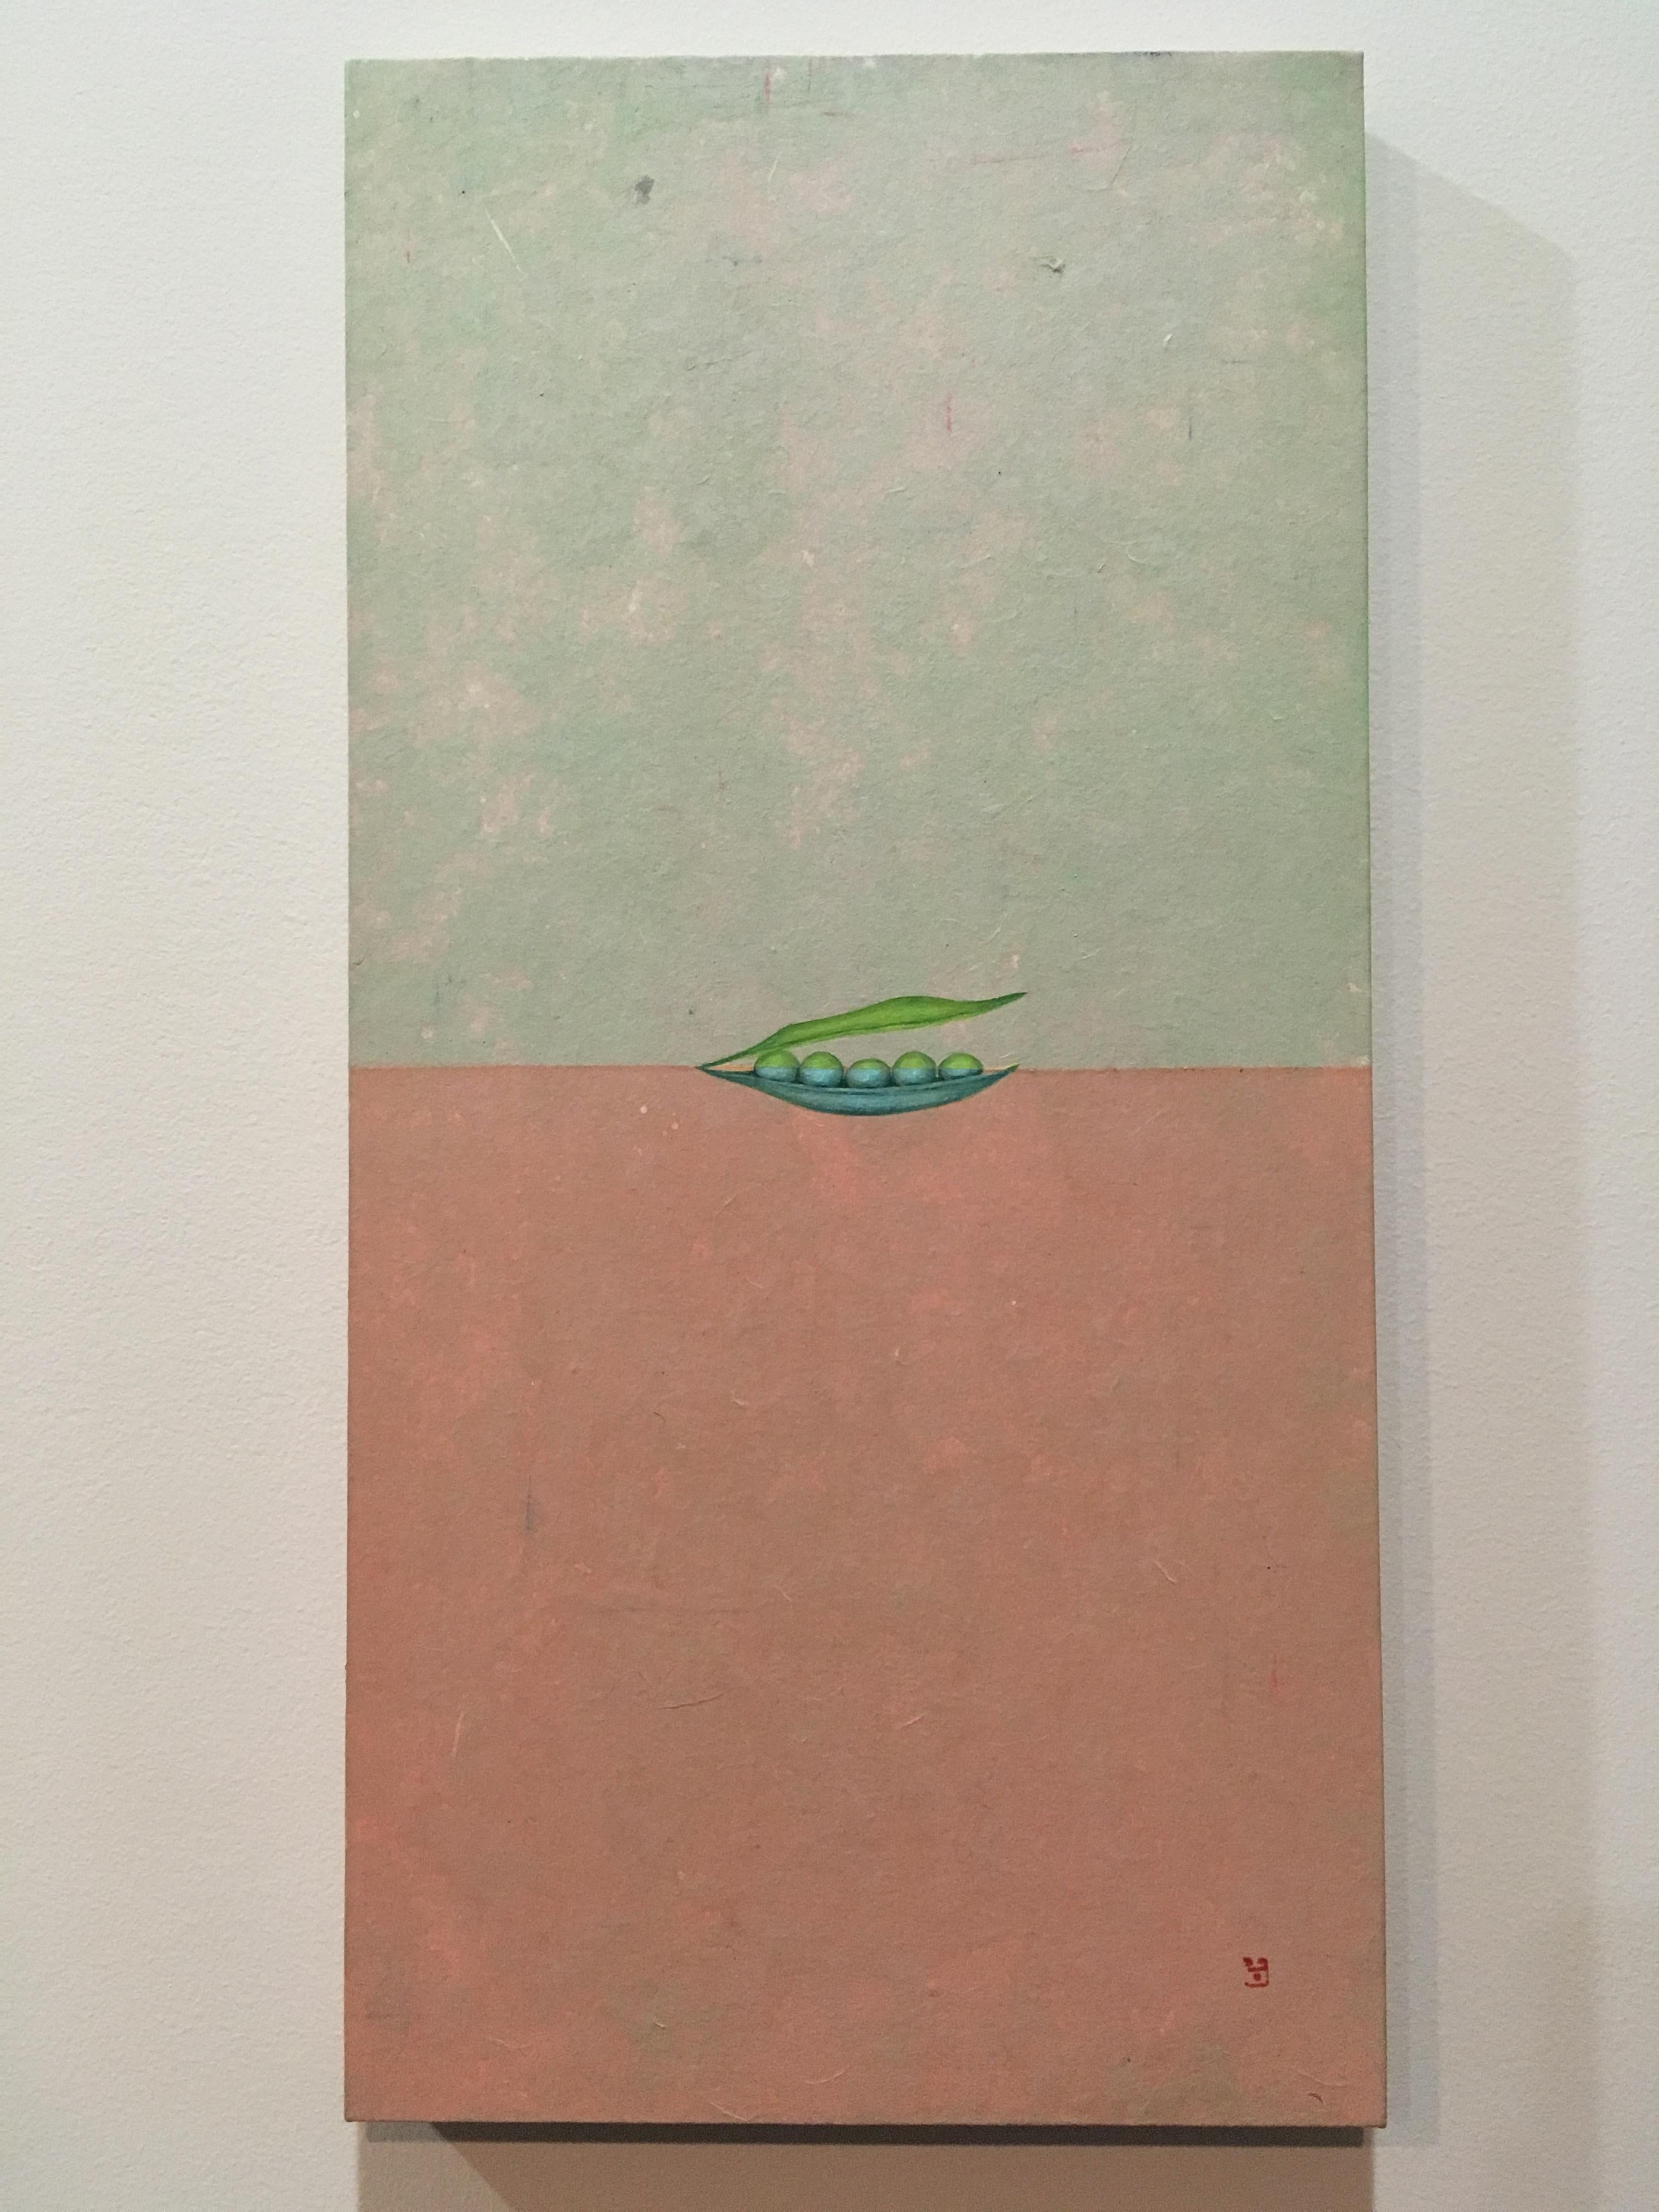 Green Peas - Minimalist Mixed Media Art by Heejin Sutton